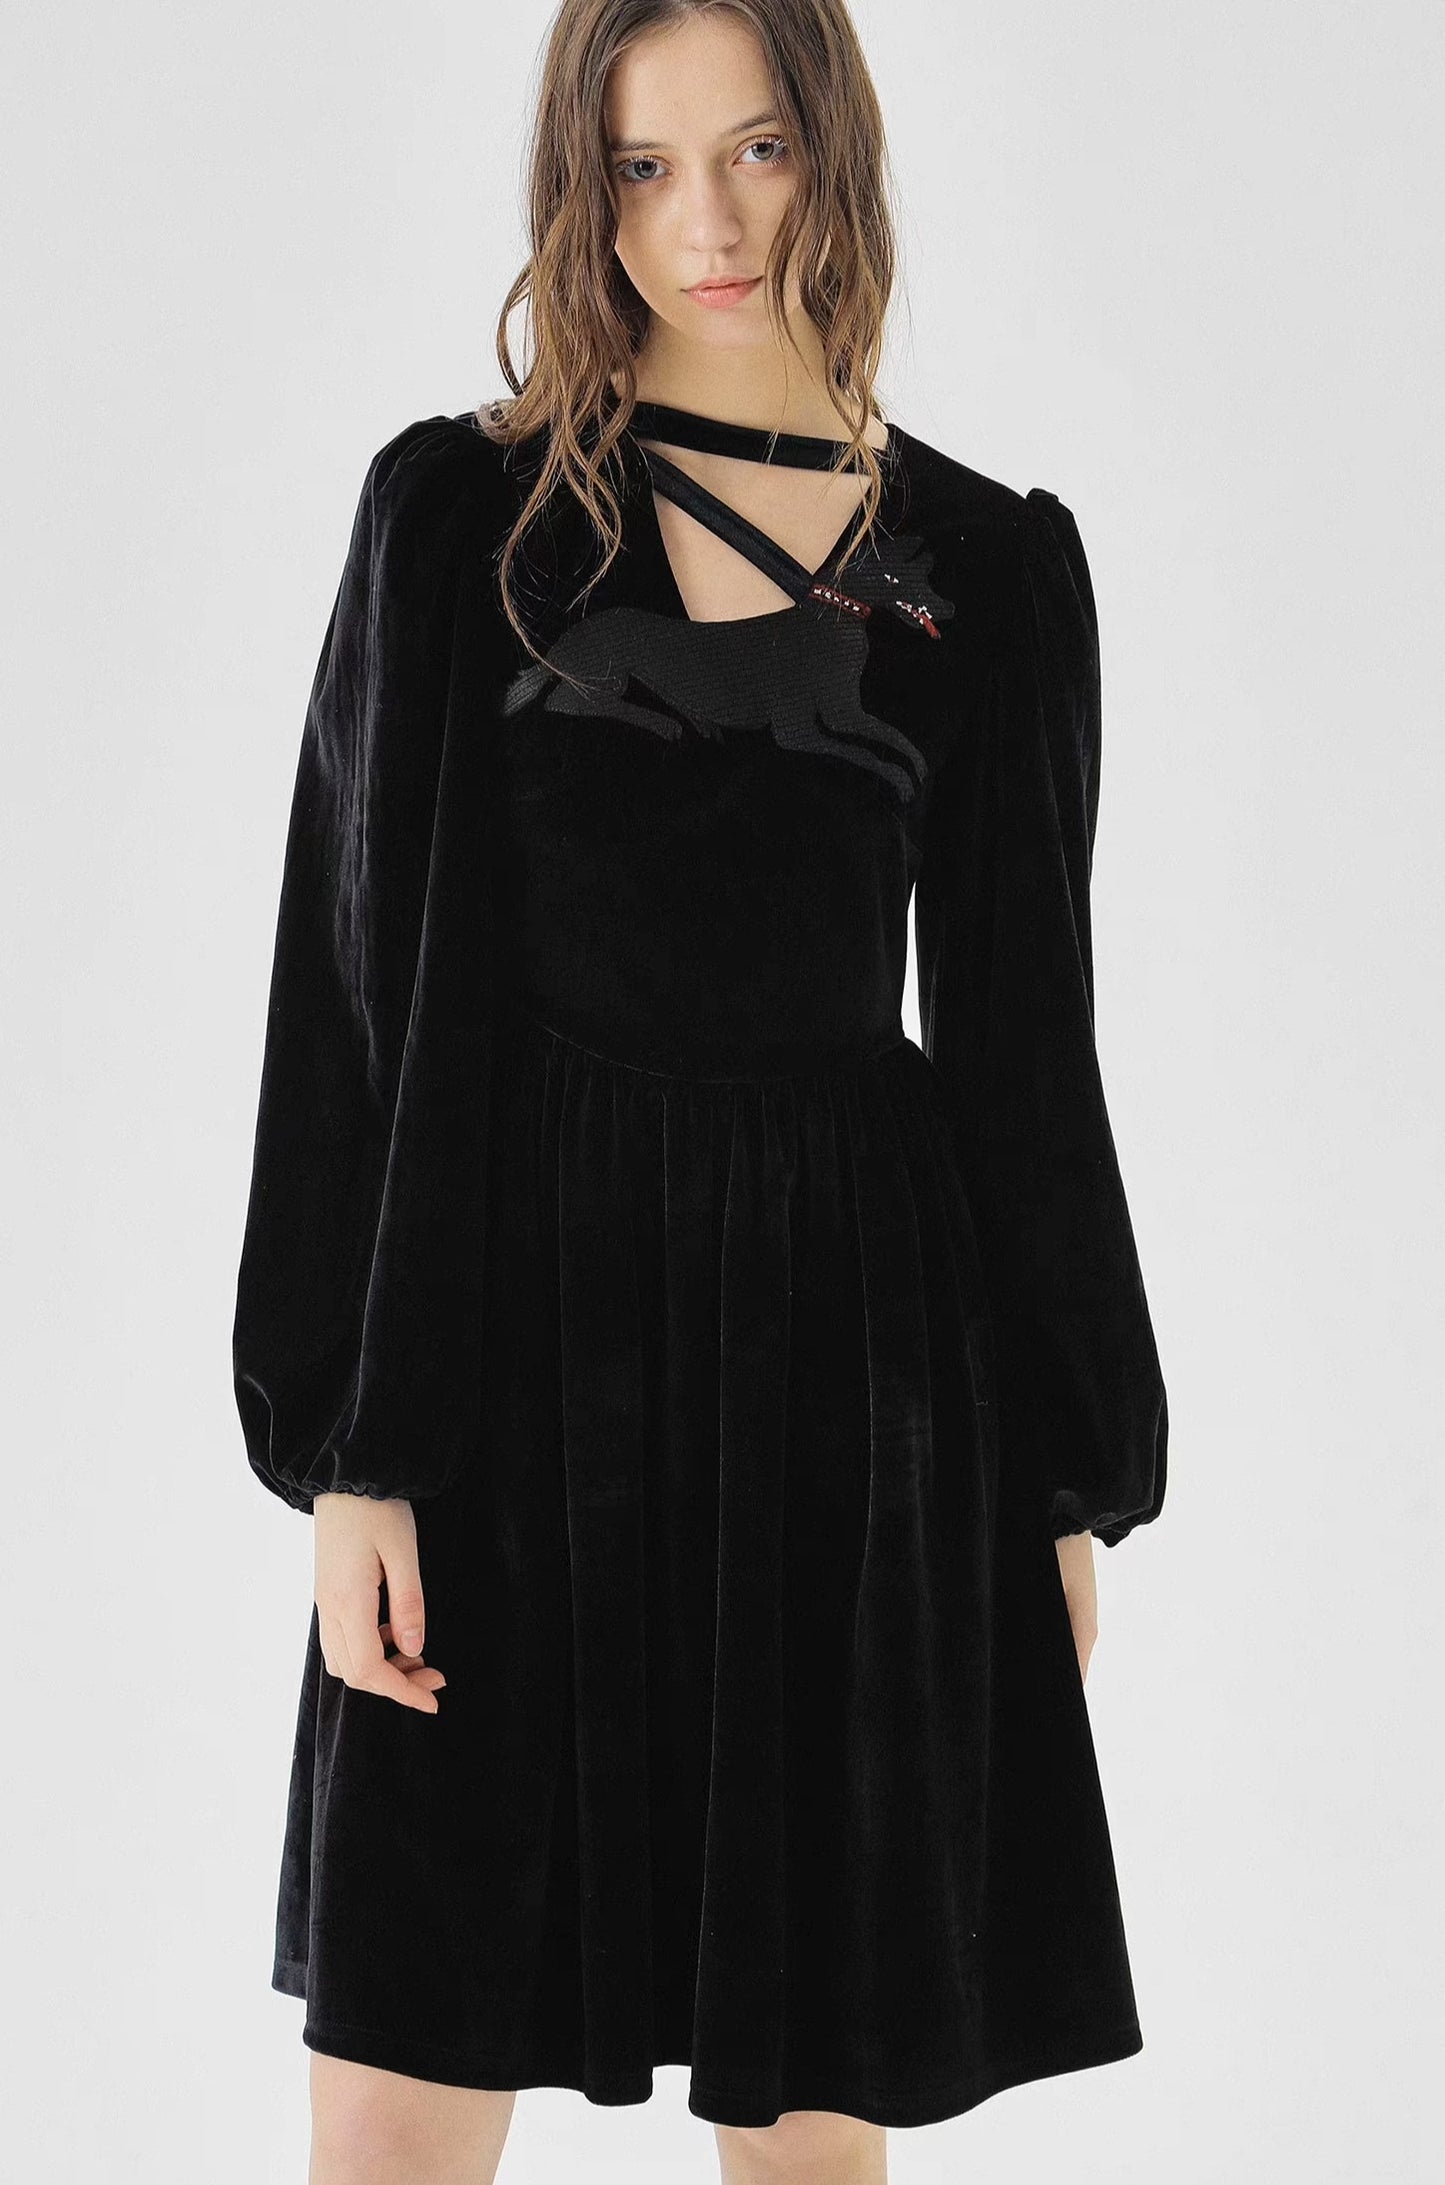 black velvet dress with dog animal embroidery 